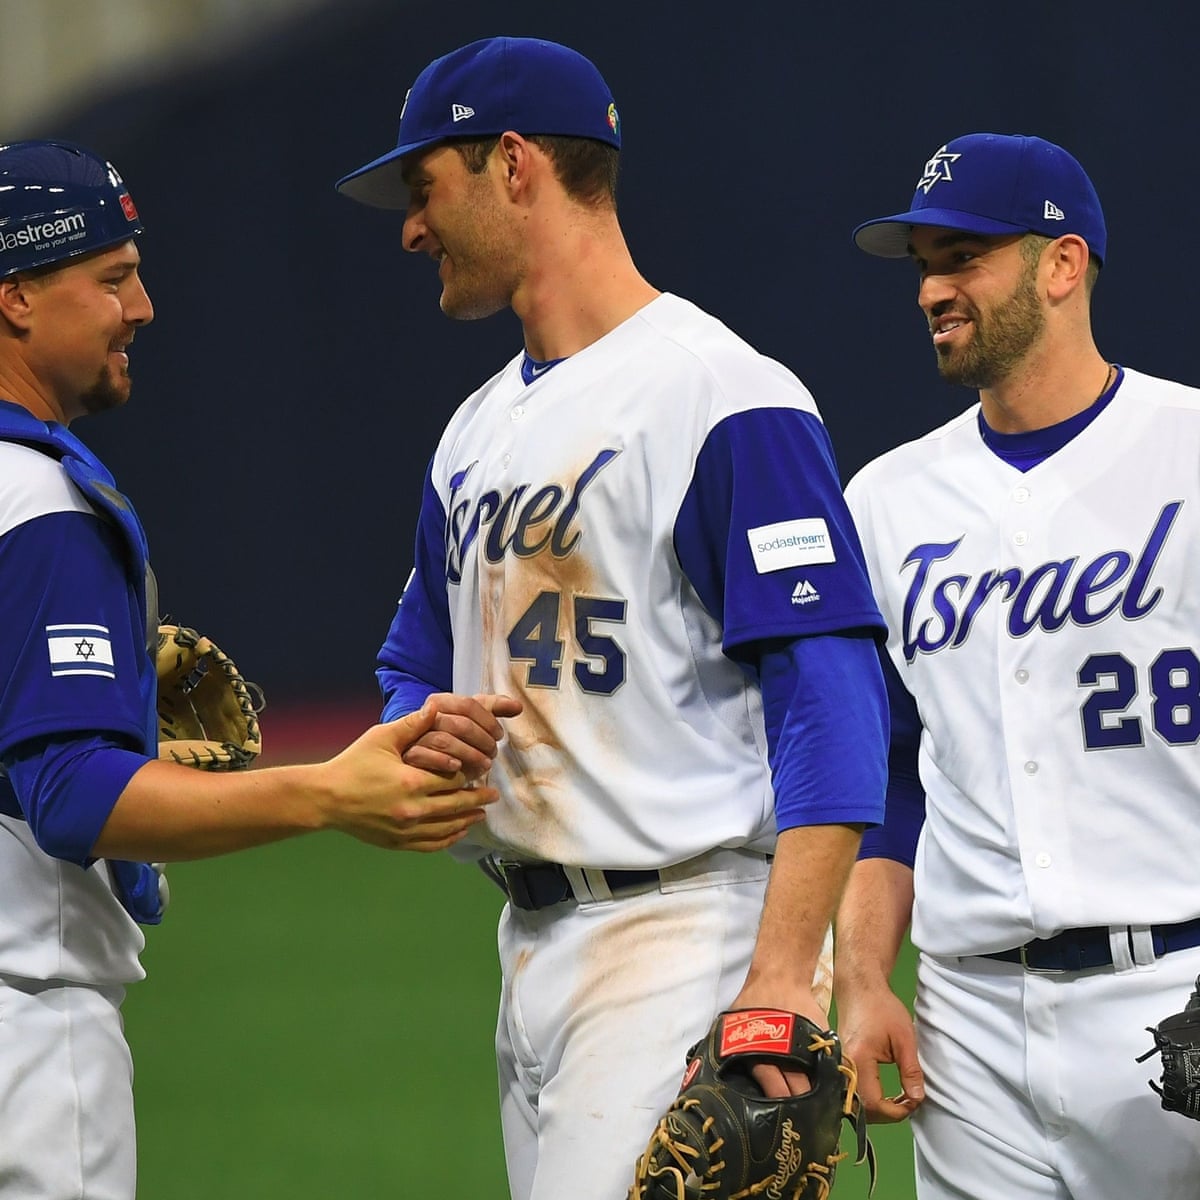 Israel's baseball team: a cute farce, but still a great story